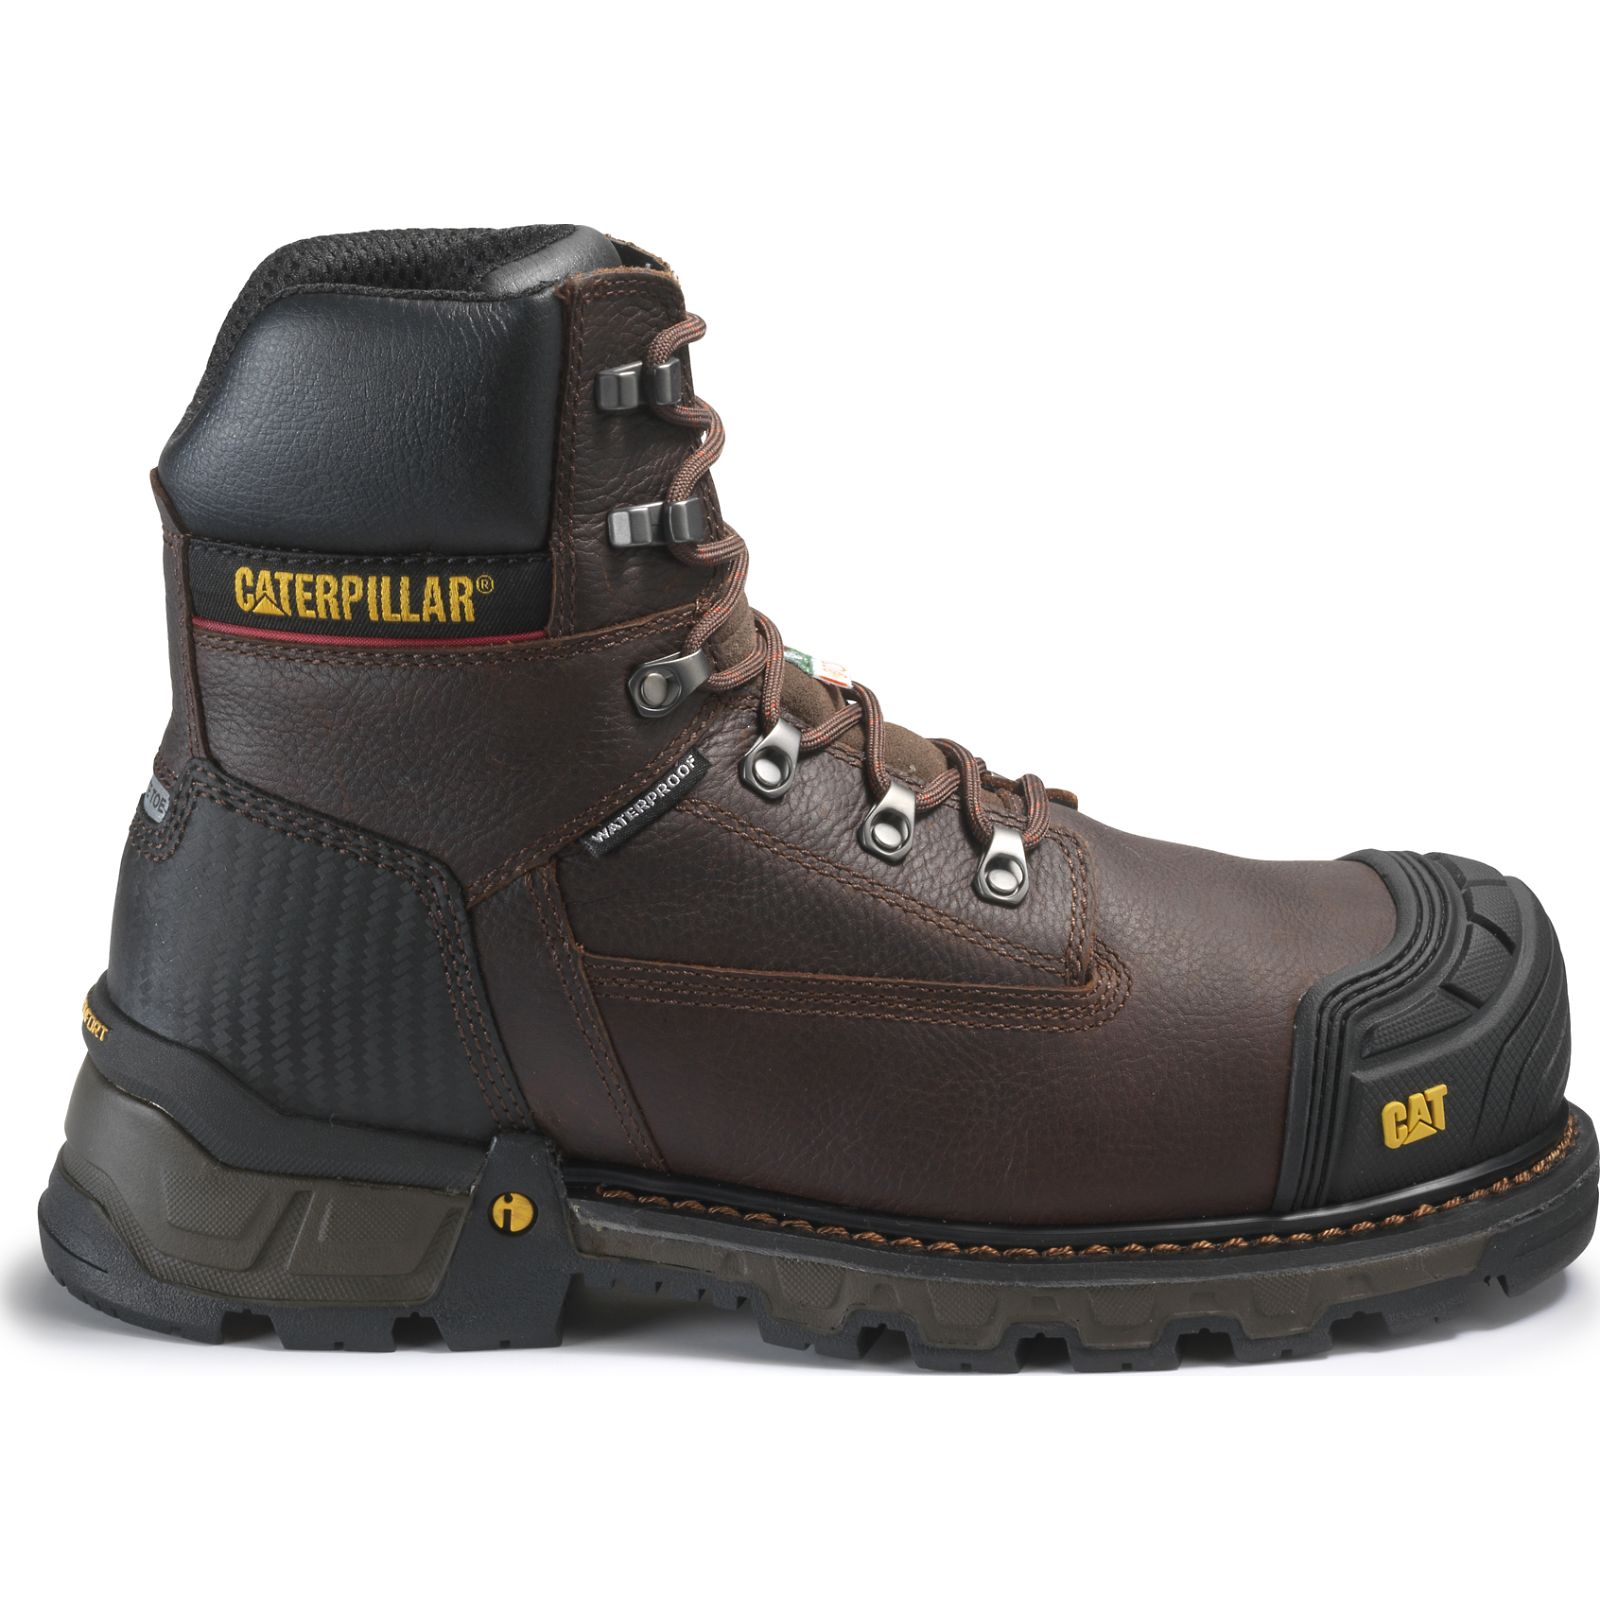 Caterpillar Excavator Xl 6” Wp Tx Ct Csa Philippines - Mens Work Boots - Brown 75169CGRN